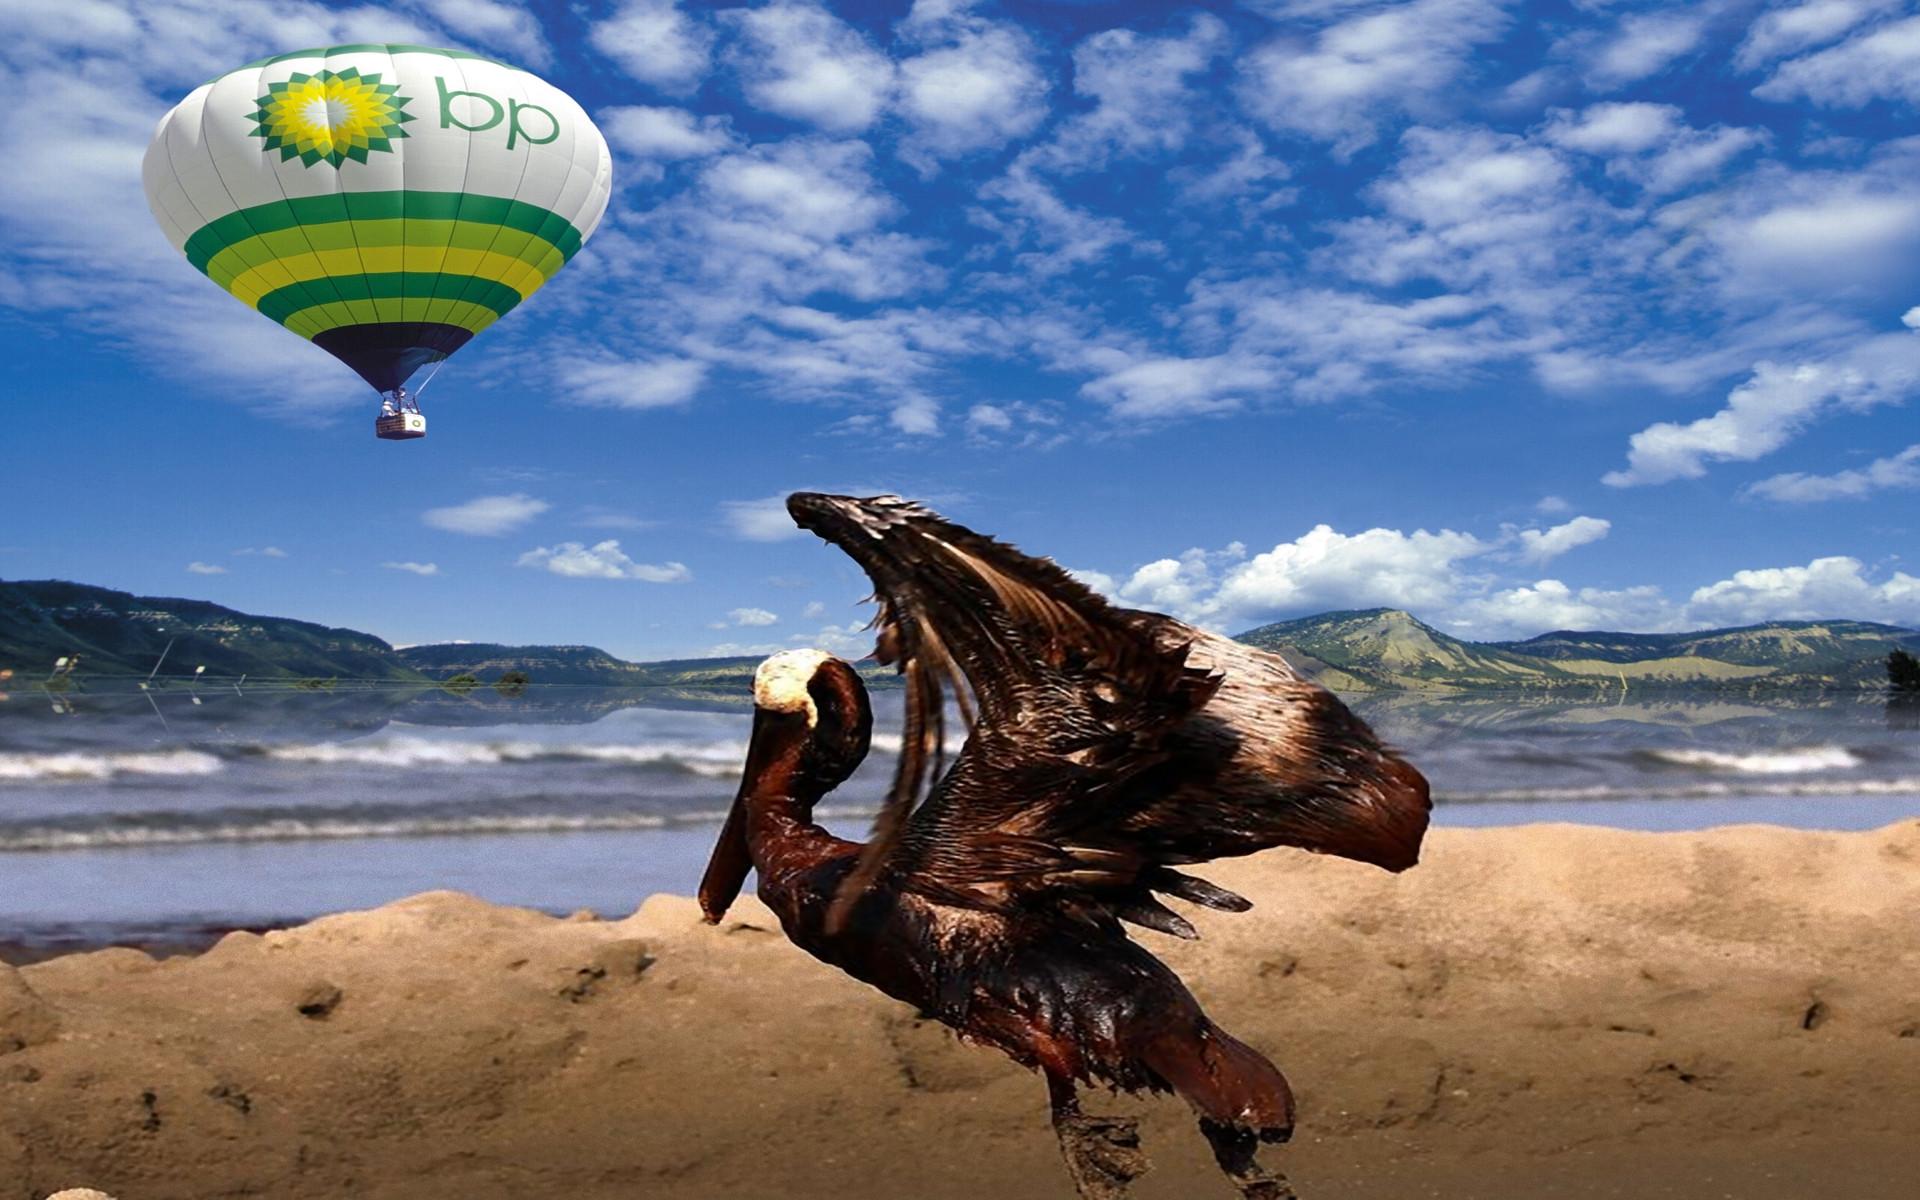 Download the bp Oil Pelican Wallpaper, bp Oil Pelican iPhone